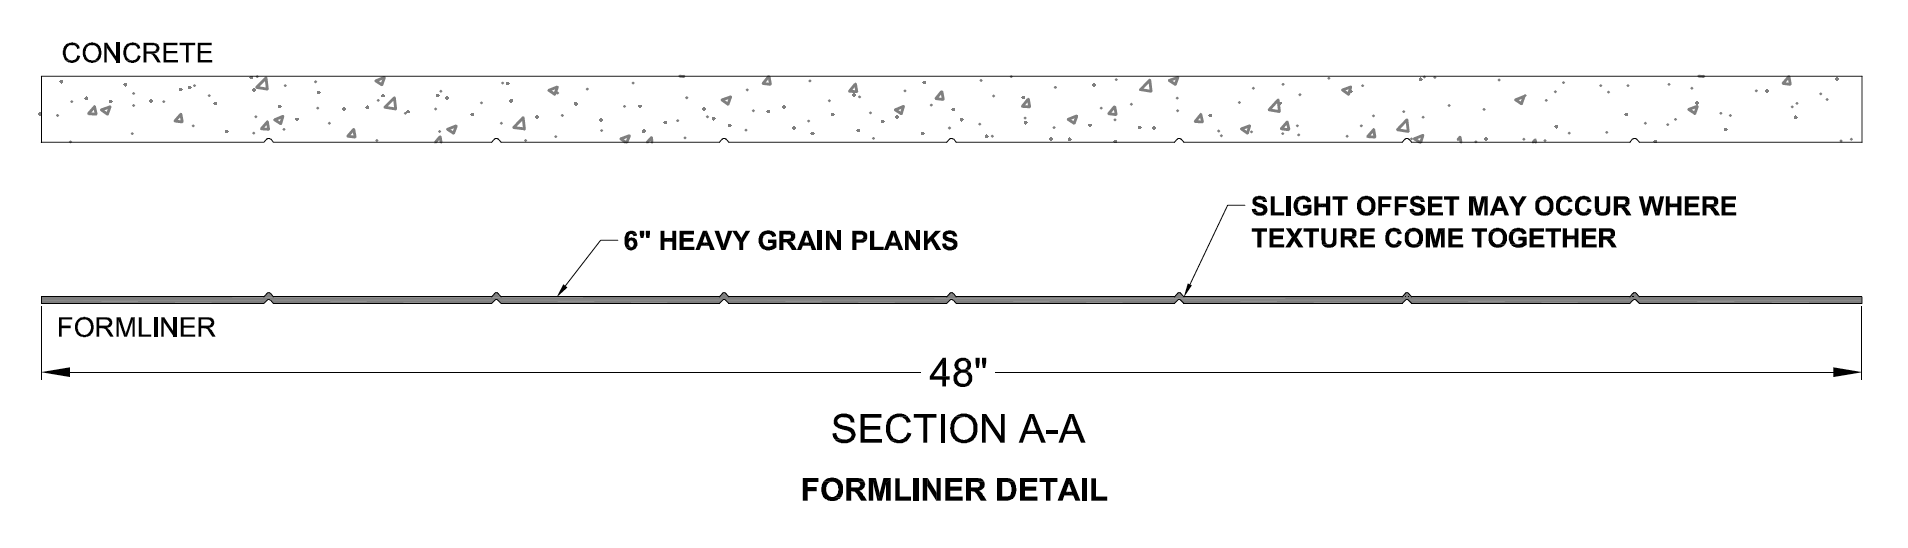 16914 Weathered Plank Vac-U-Form formliner